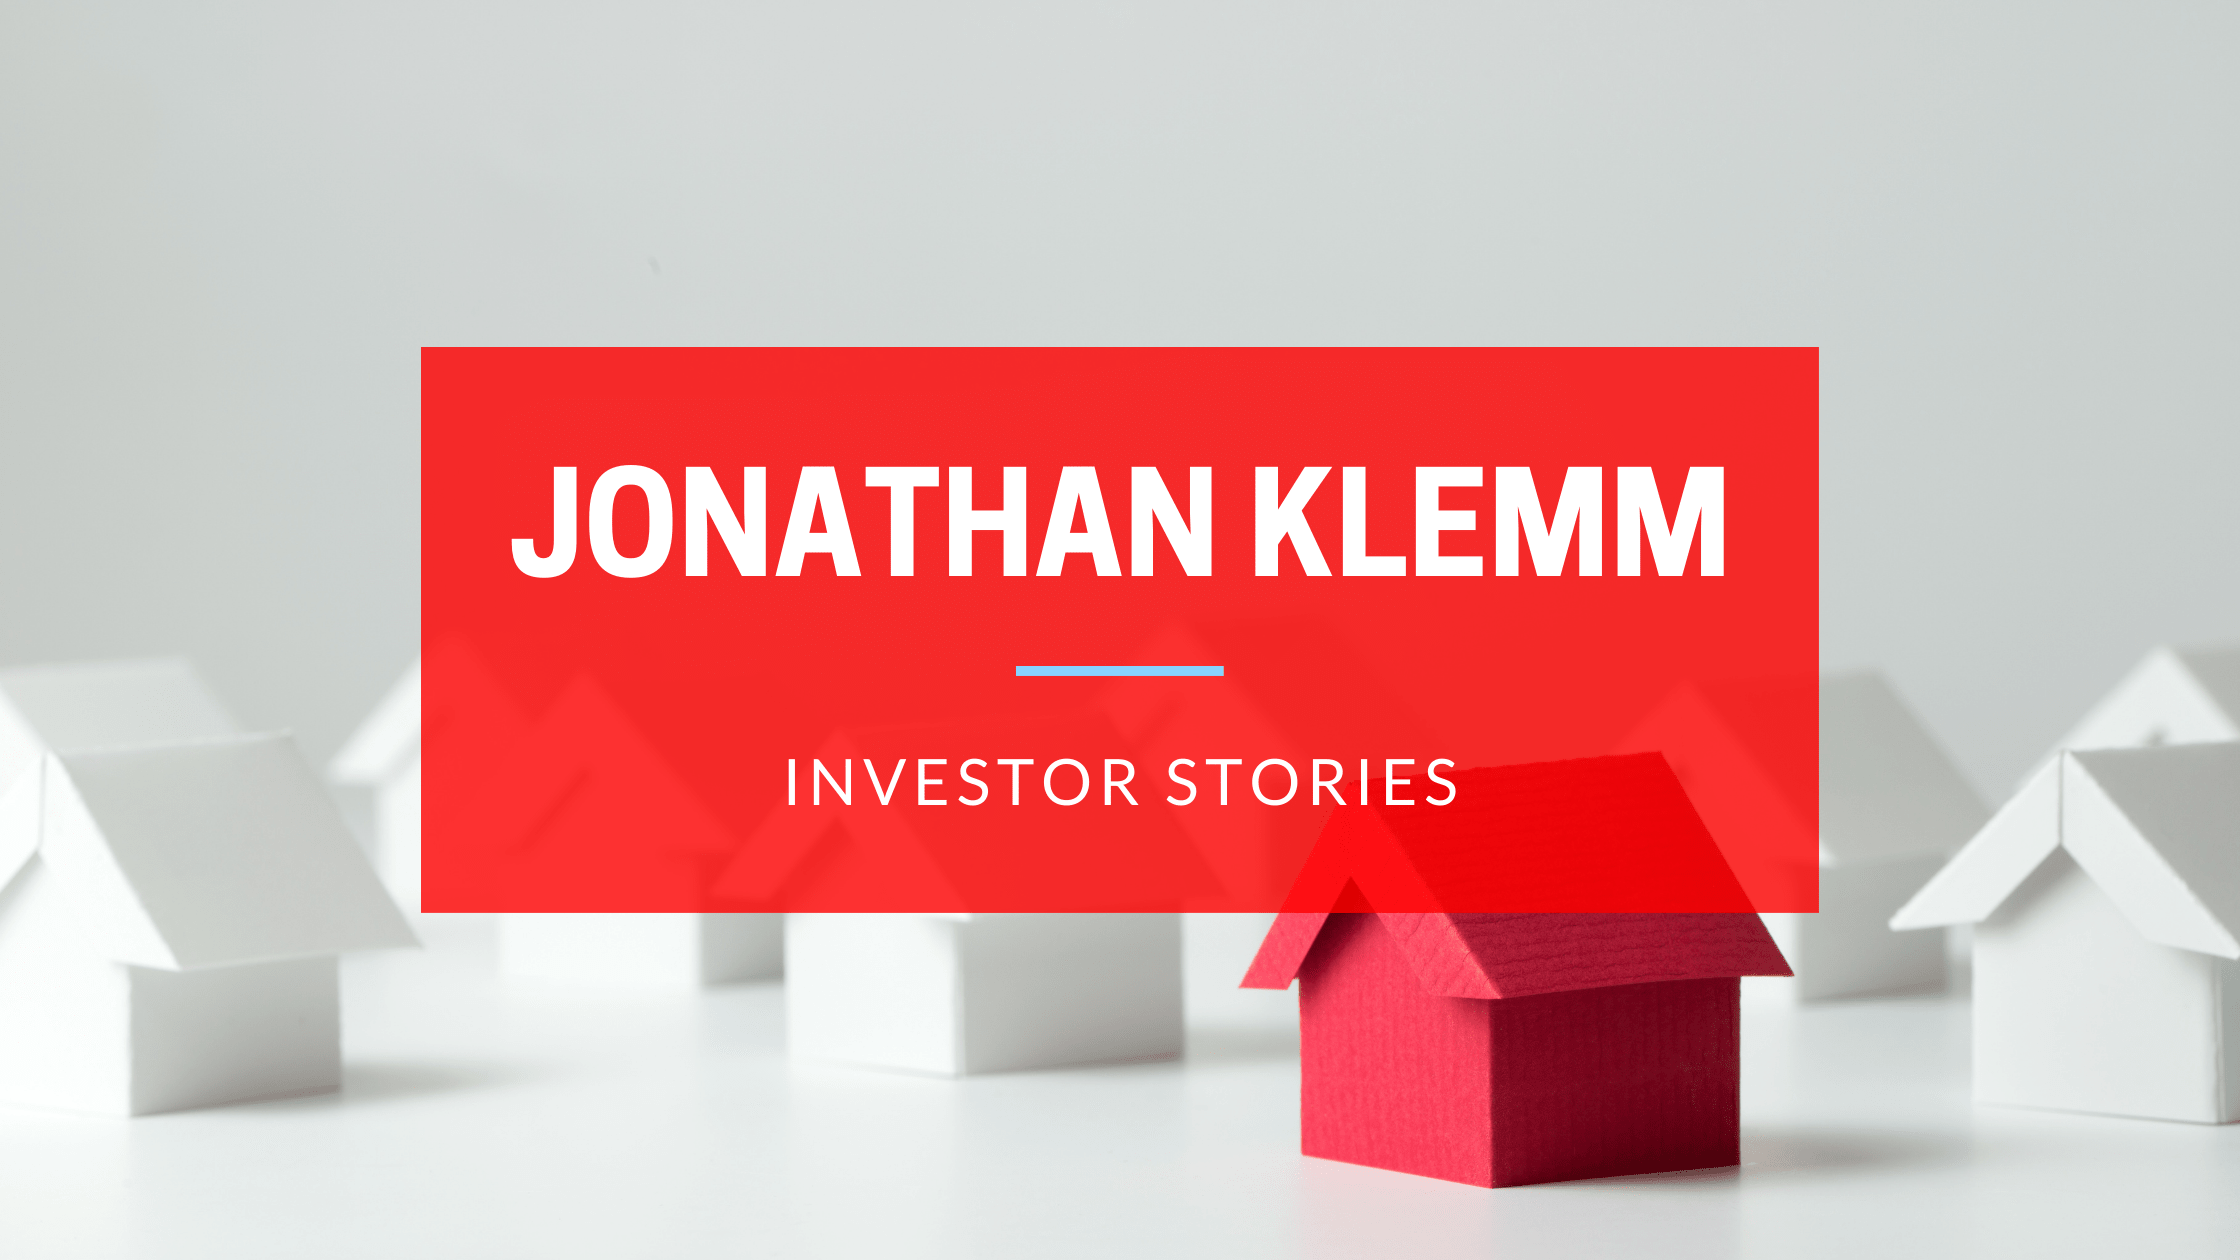 INVESTOR STORIES FEATURING JONATHAN KLEMM